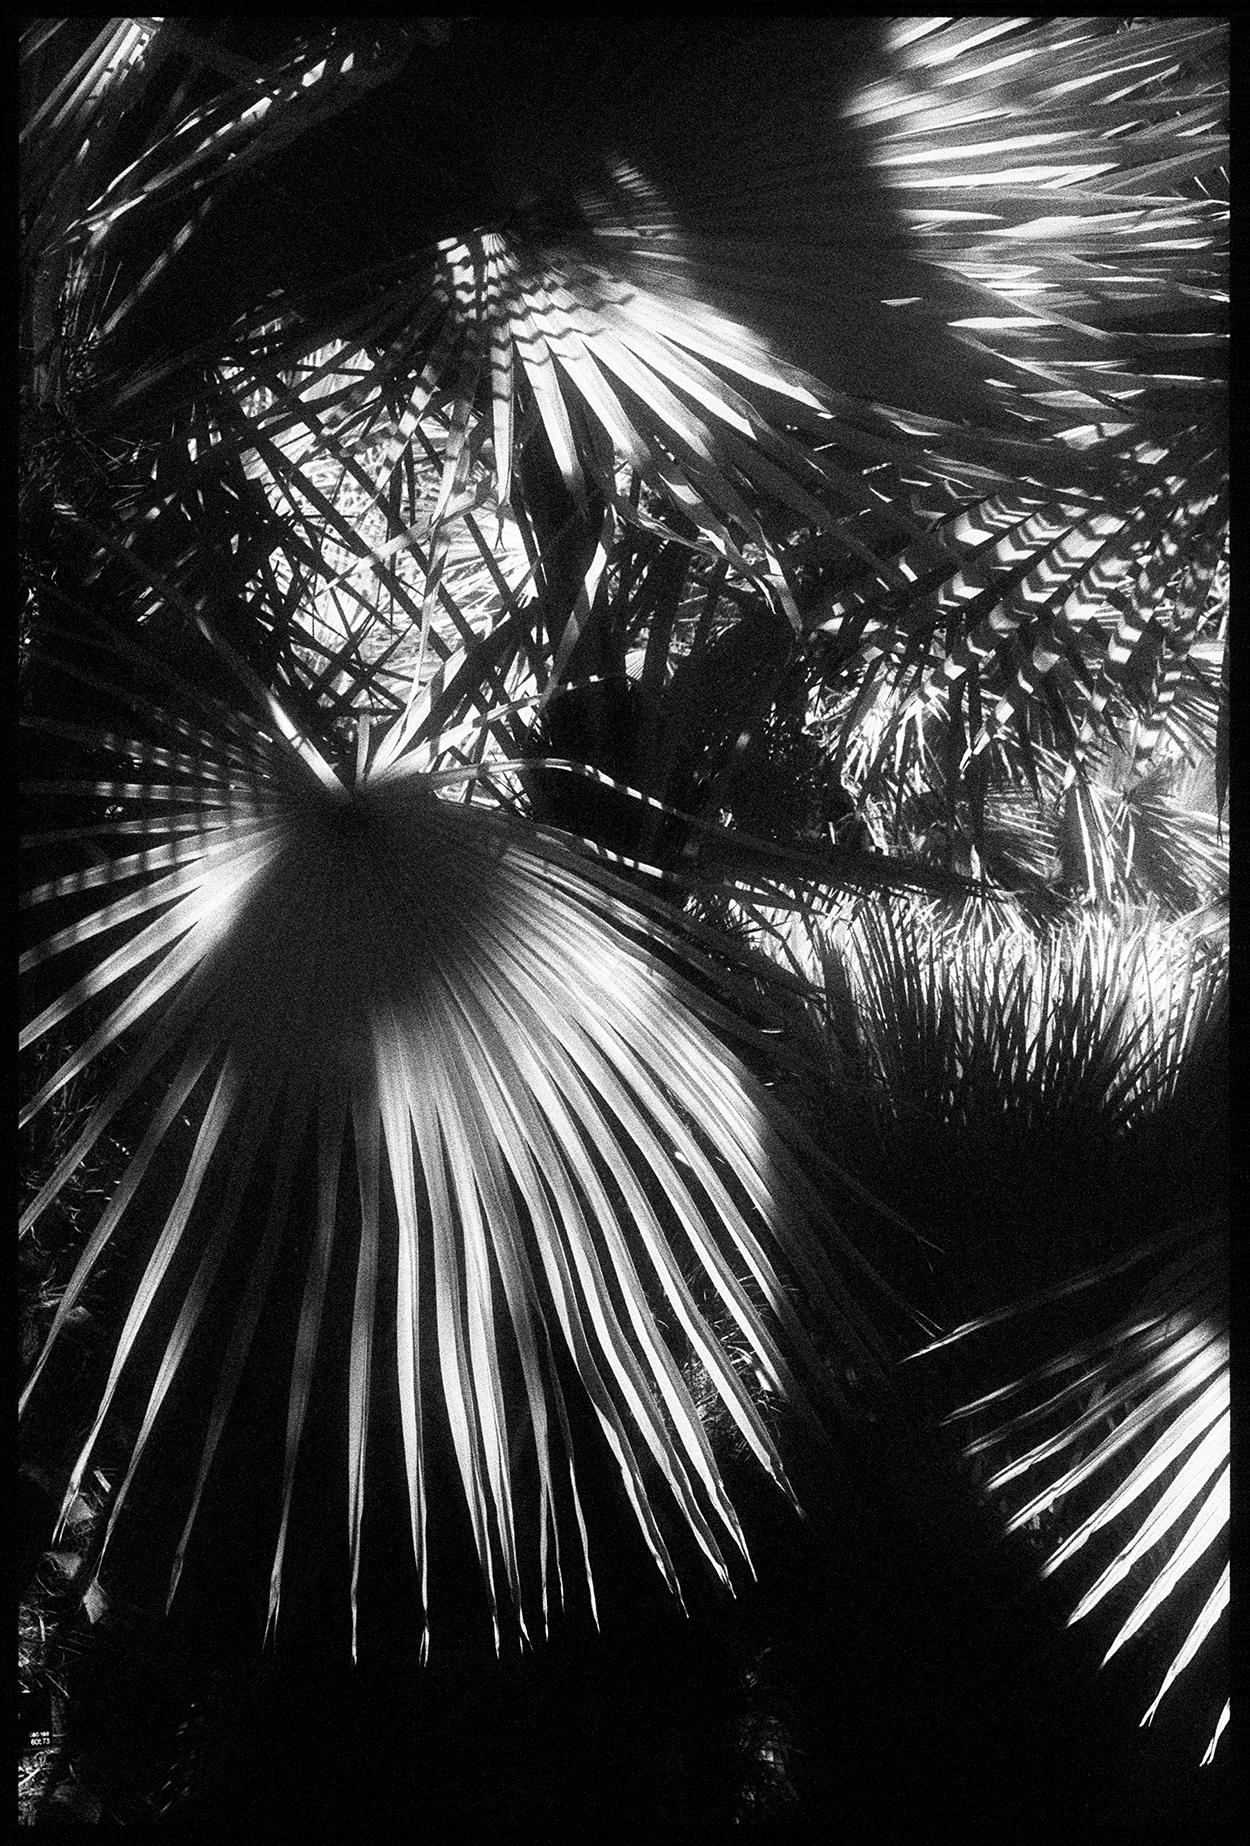 Edward Alfano Landscape Photograph - Huntington Gardens XXV - Black & White Infrared of Palms Landscape Surreal Photo